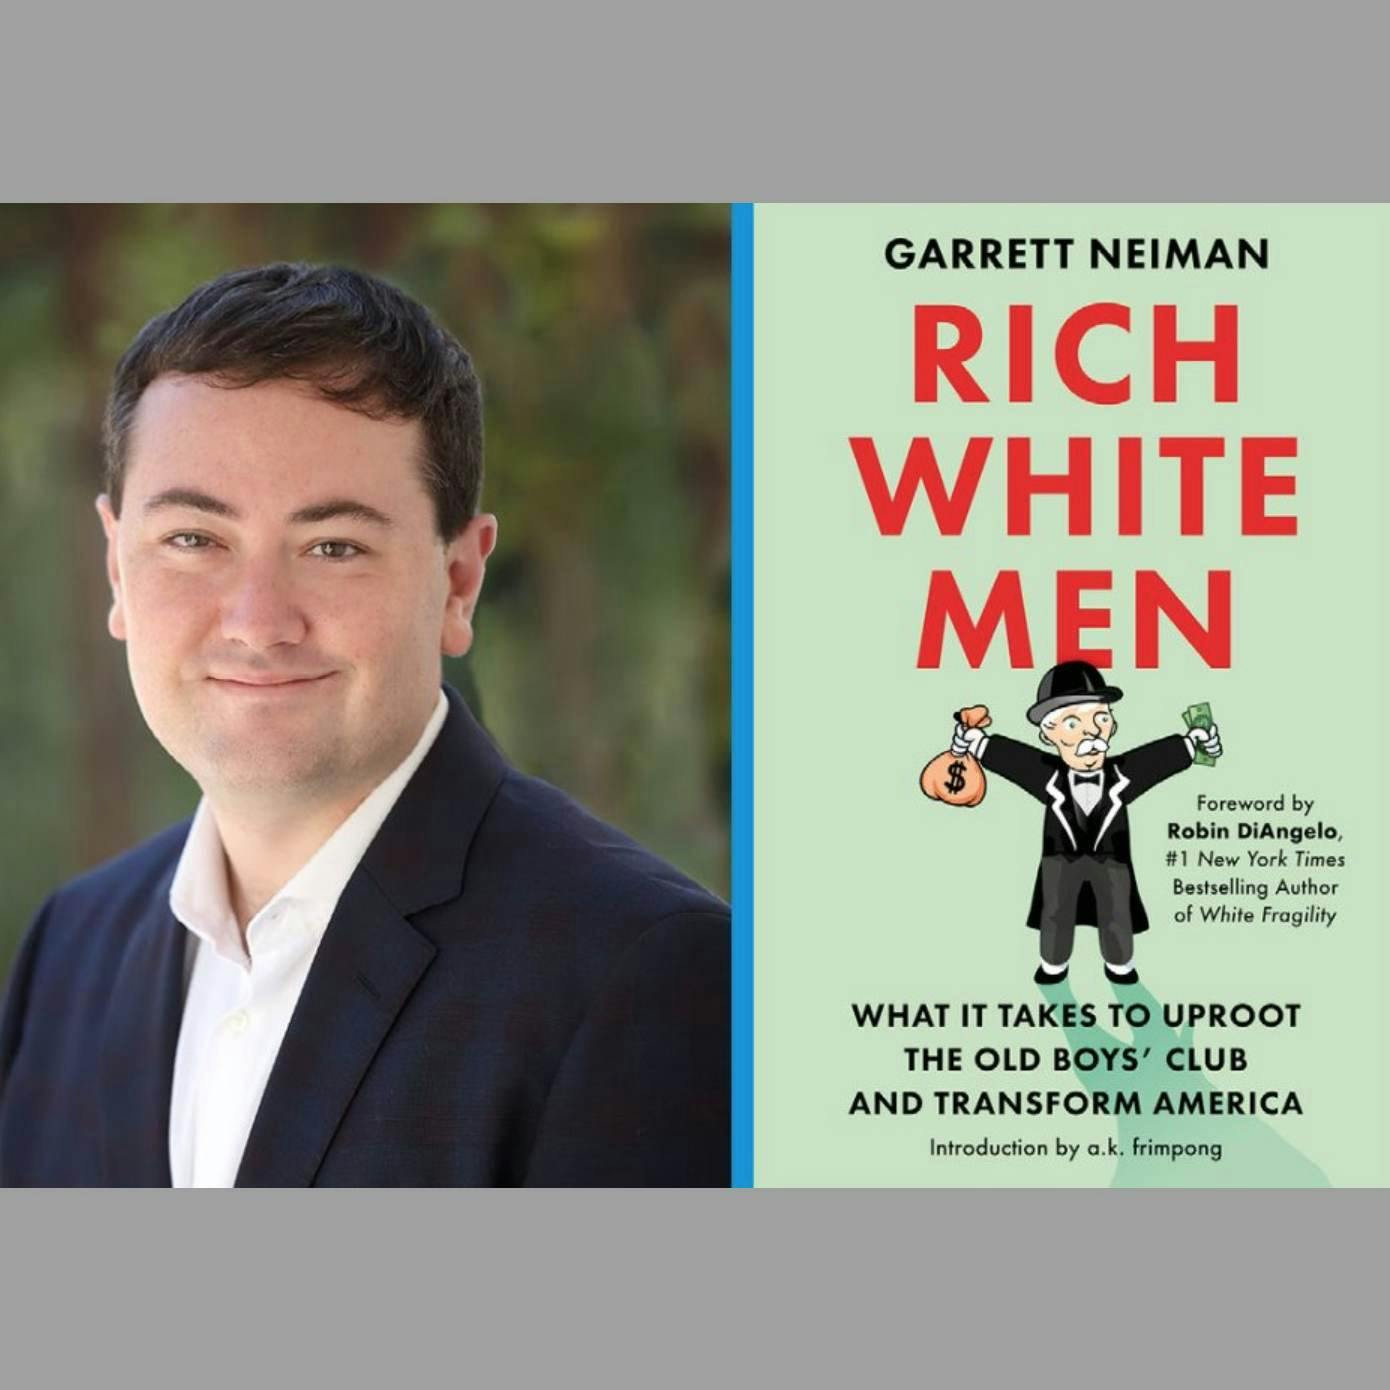 Garrett Neiman on Rich White Men